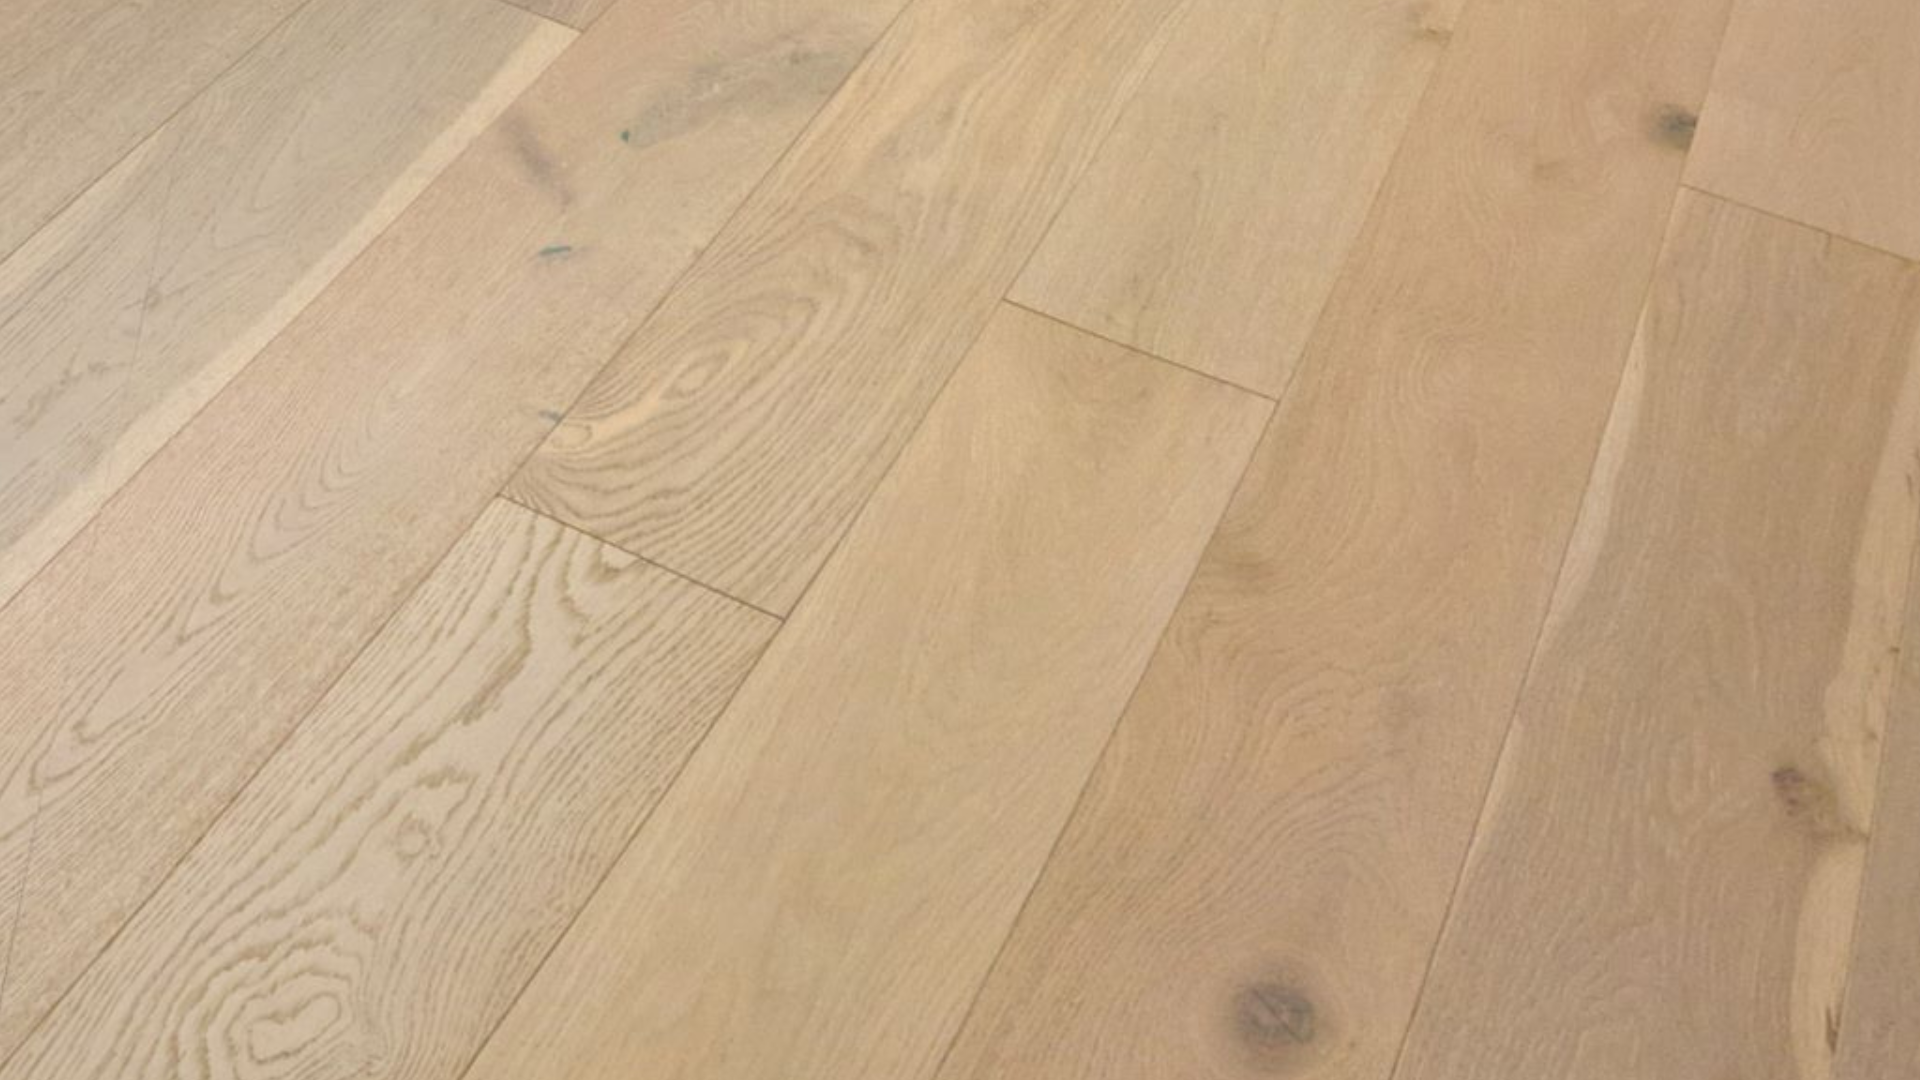 Hardwood flooring swatch